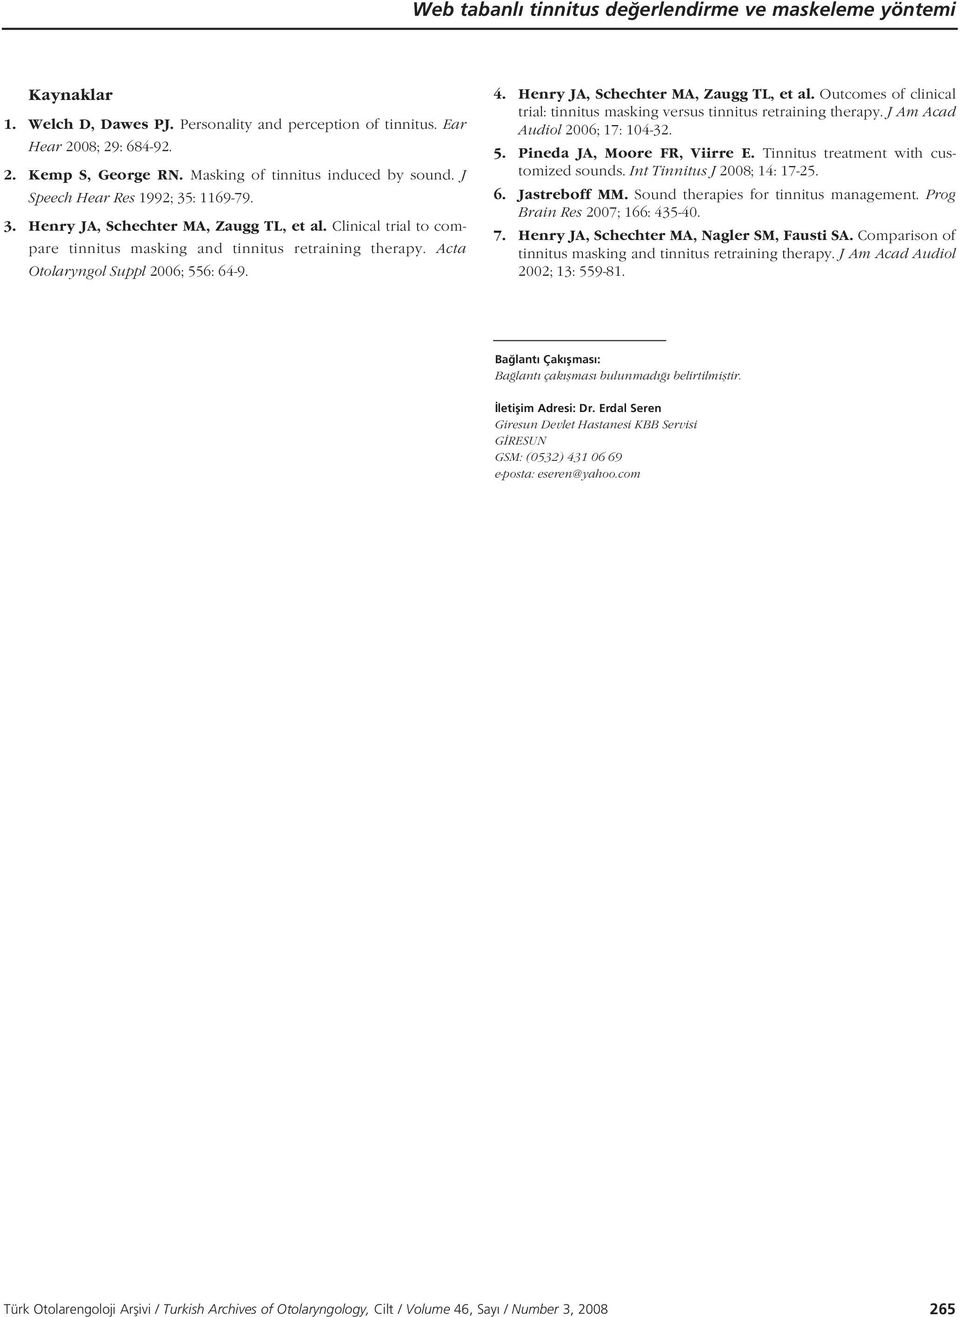 Acta Otolaryngol Suppl 2006; 556: 64-9. 4. Henry JA, Schechter MA, Zaugg TL, et al. Outcomes of clinical trial: tinnitus masking versus tinnitus retraining therapy. J Am Acad Audiol 2006; 17: 104-32.